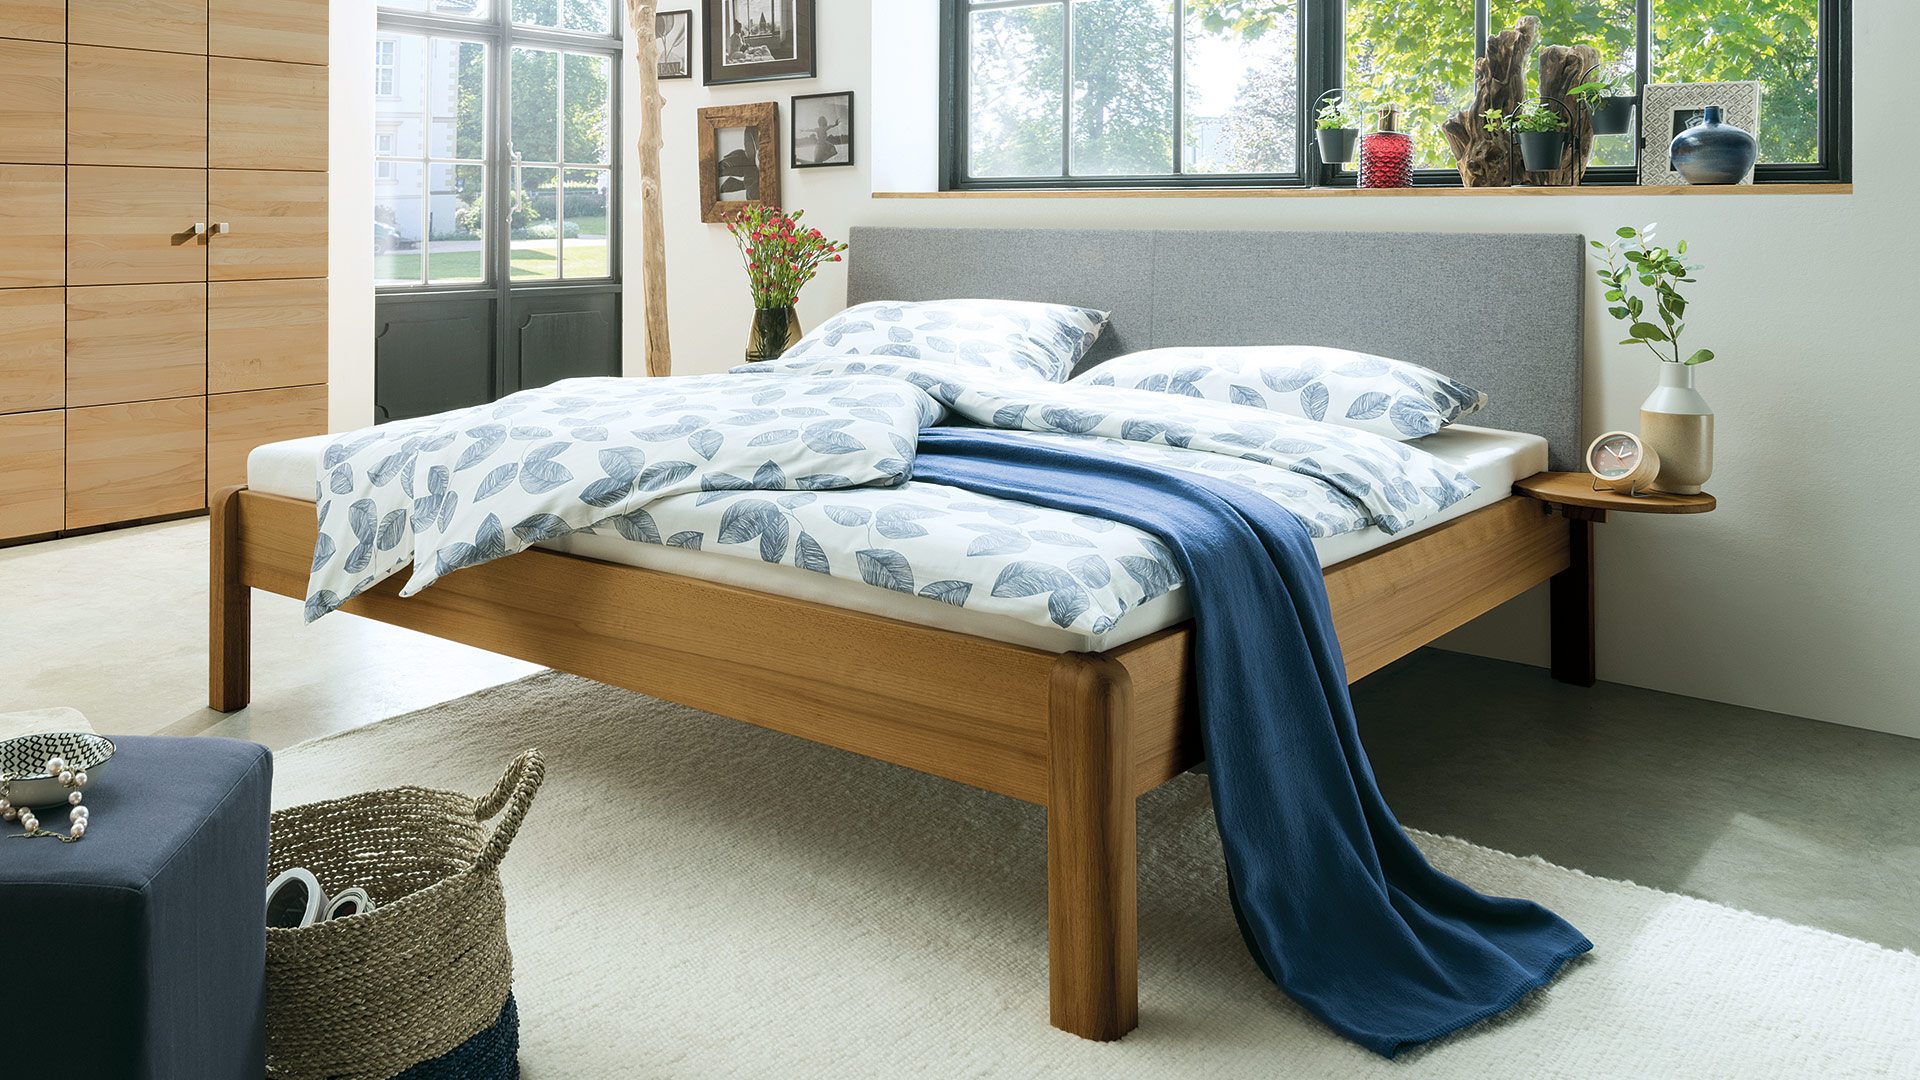 Massivholzbett "Siena" - komplett metallfreies Bett aus Massivholz